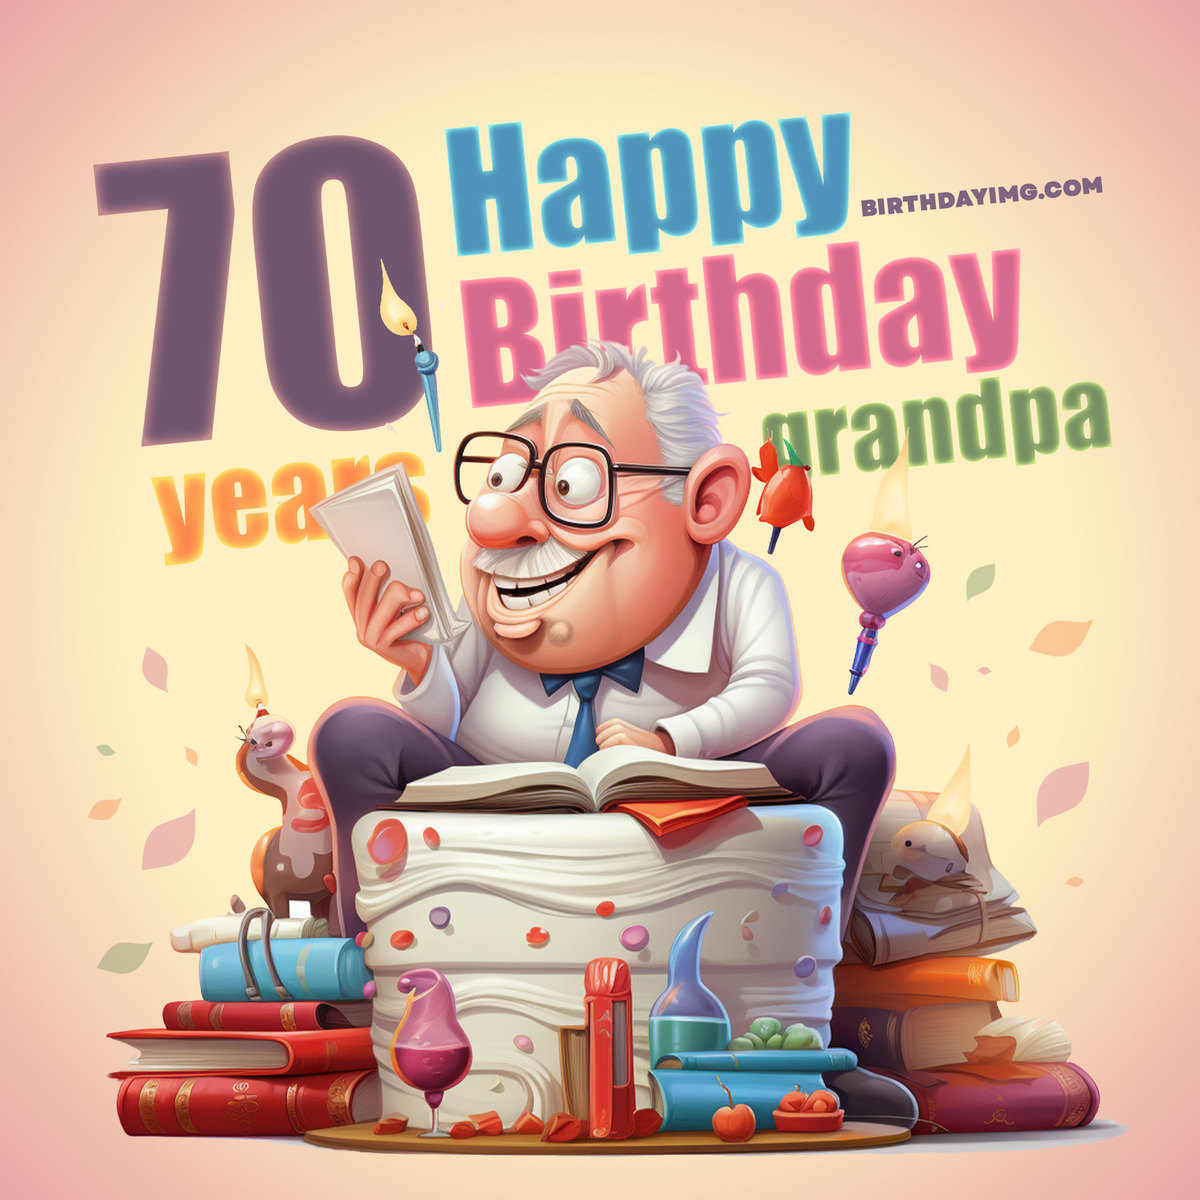 Free Happy 70th Birthday Grandpa - birthdayimg.com